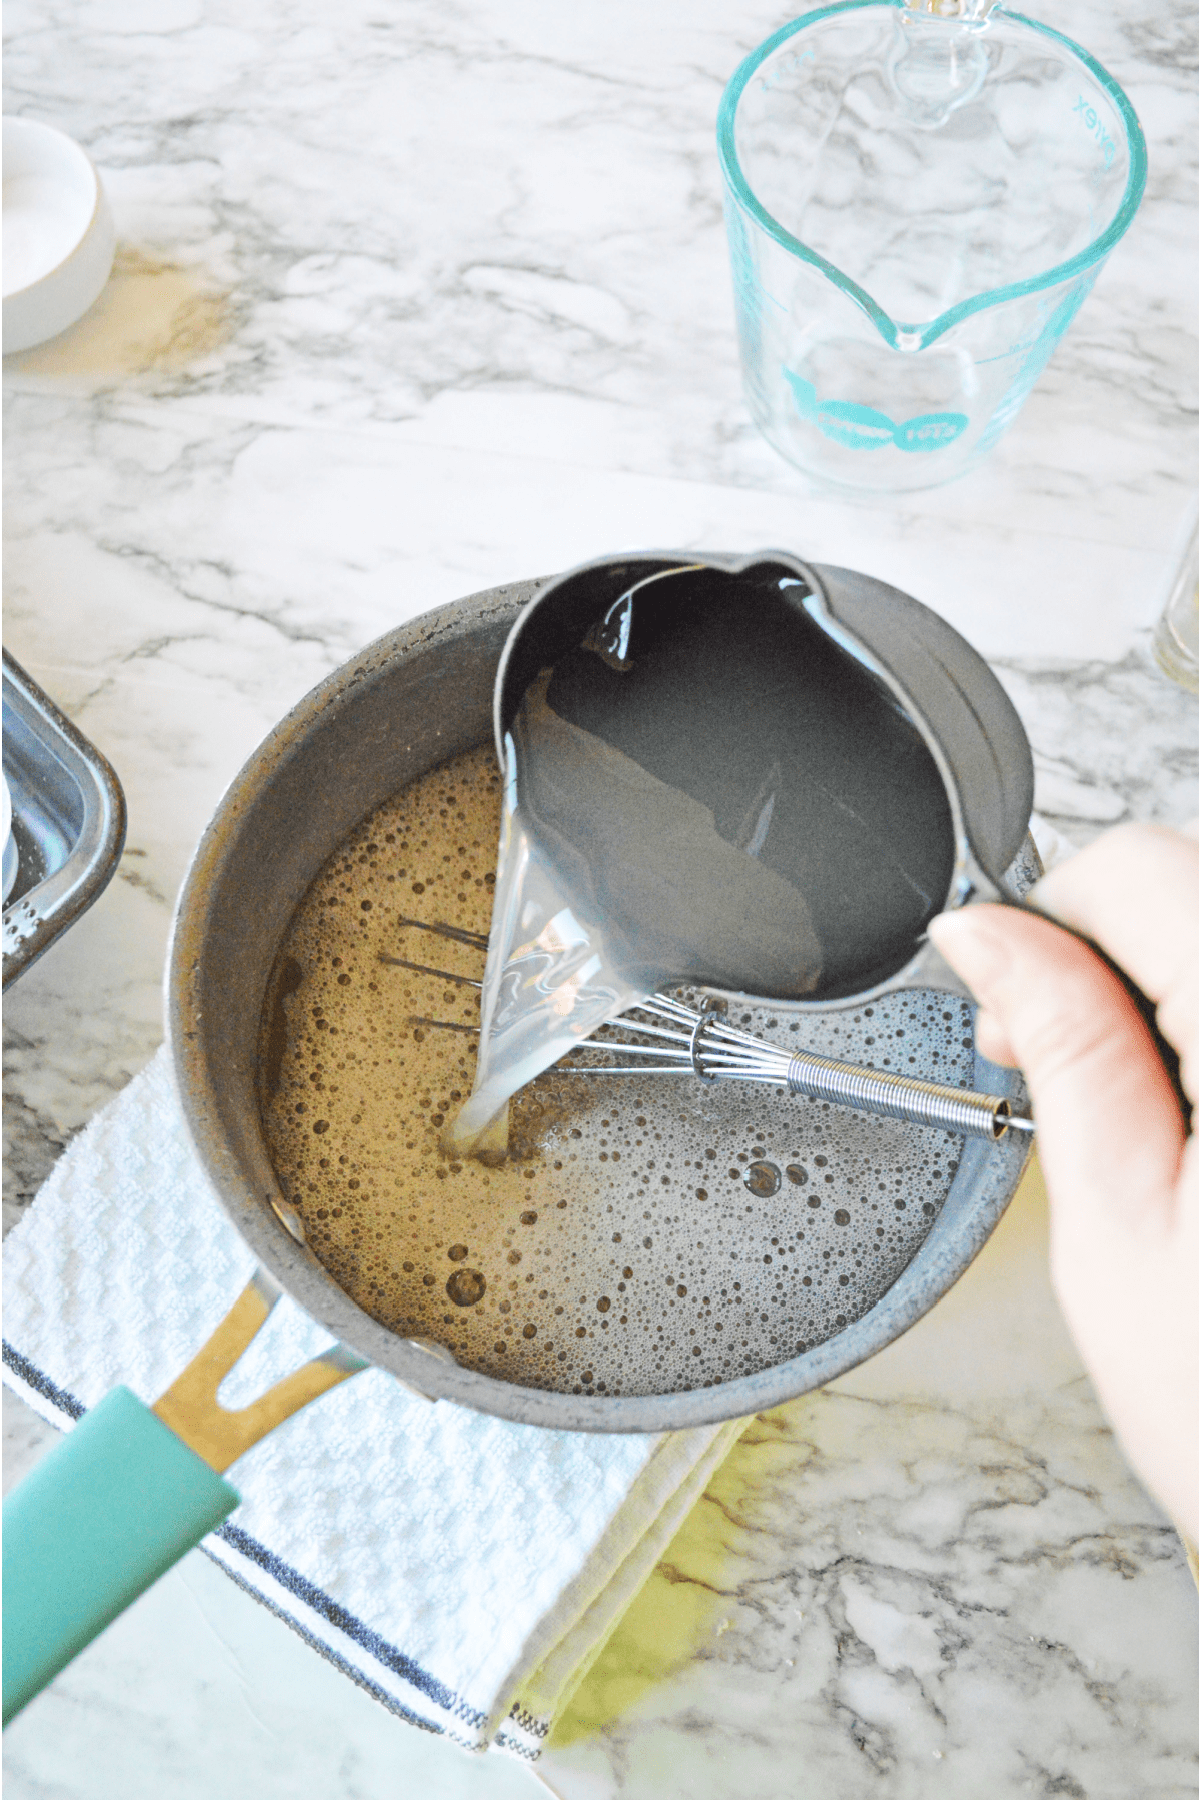 Adding margarita mix to sauce pan for jello shots